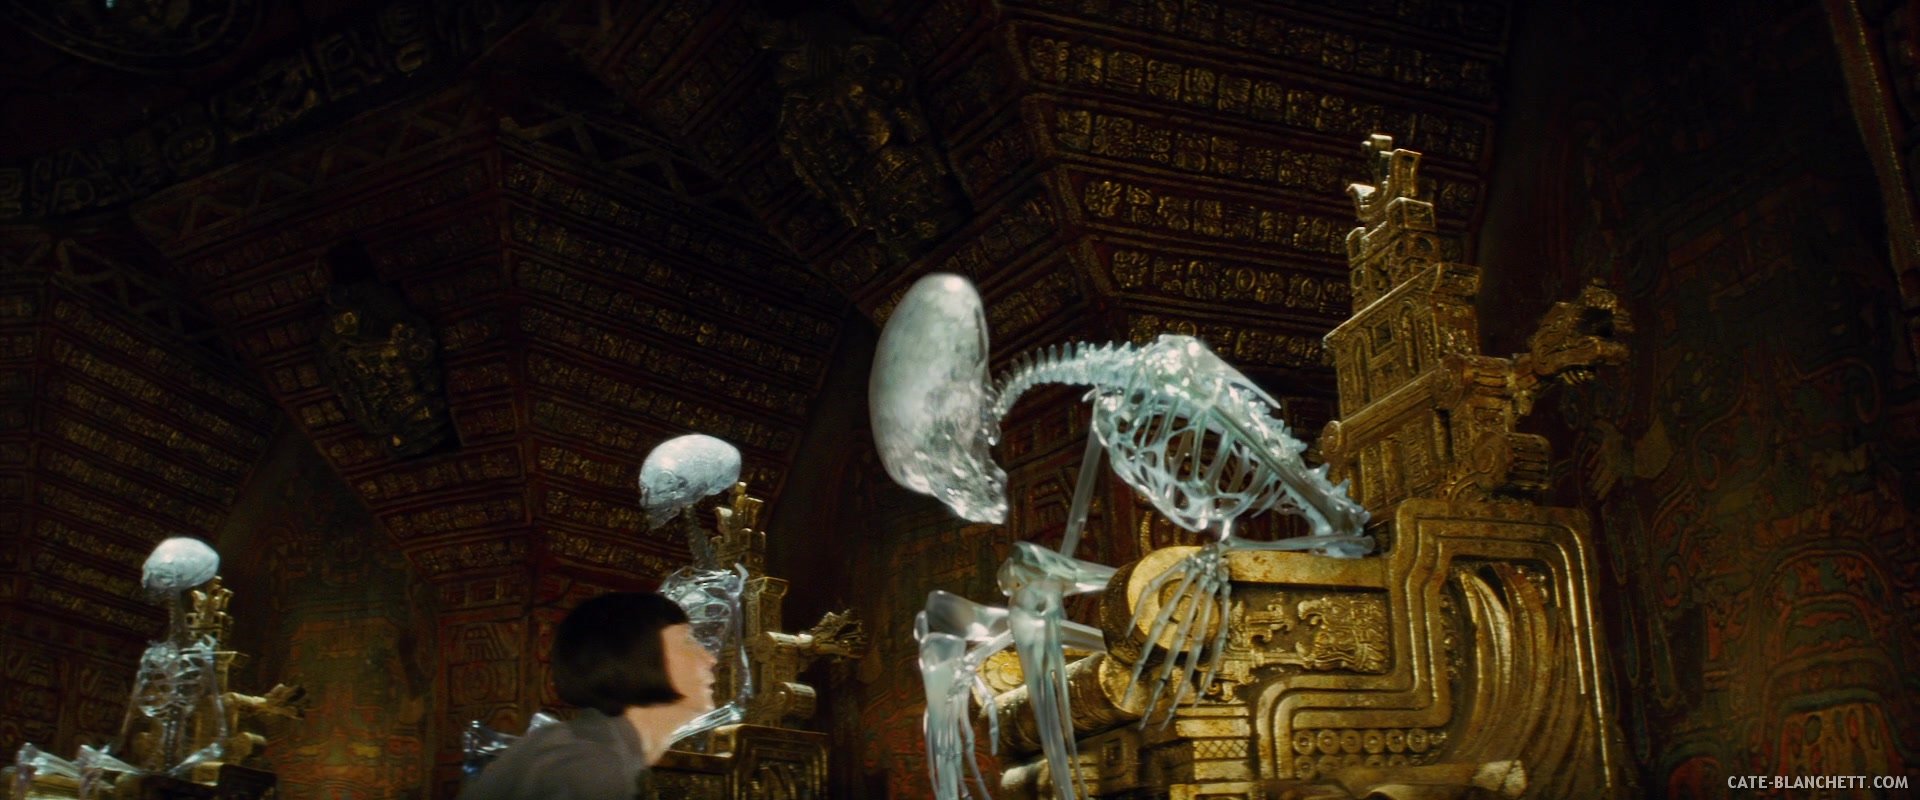 Indiana-Jones-And-The-Kingdom-Of-The-Crystal-Skull-643.jpg